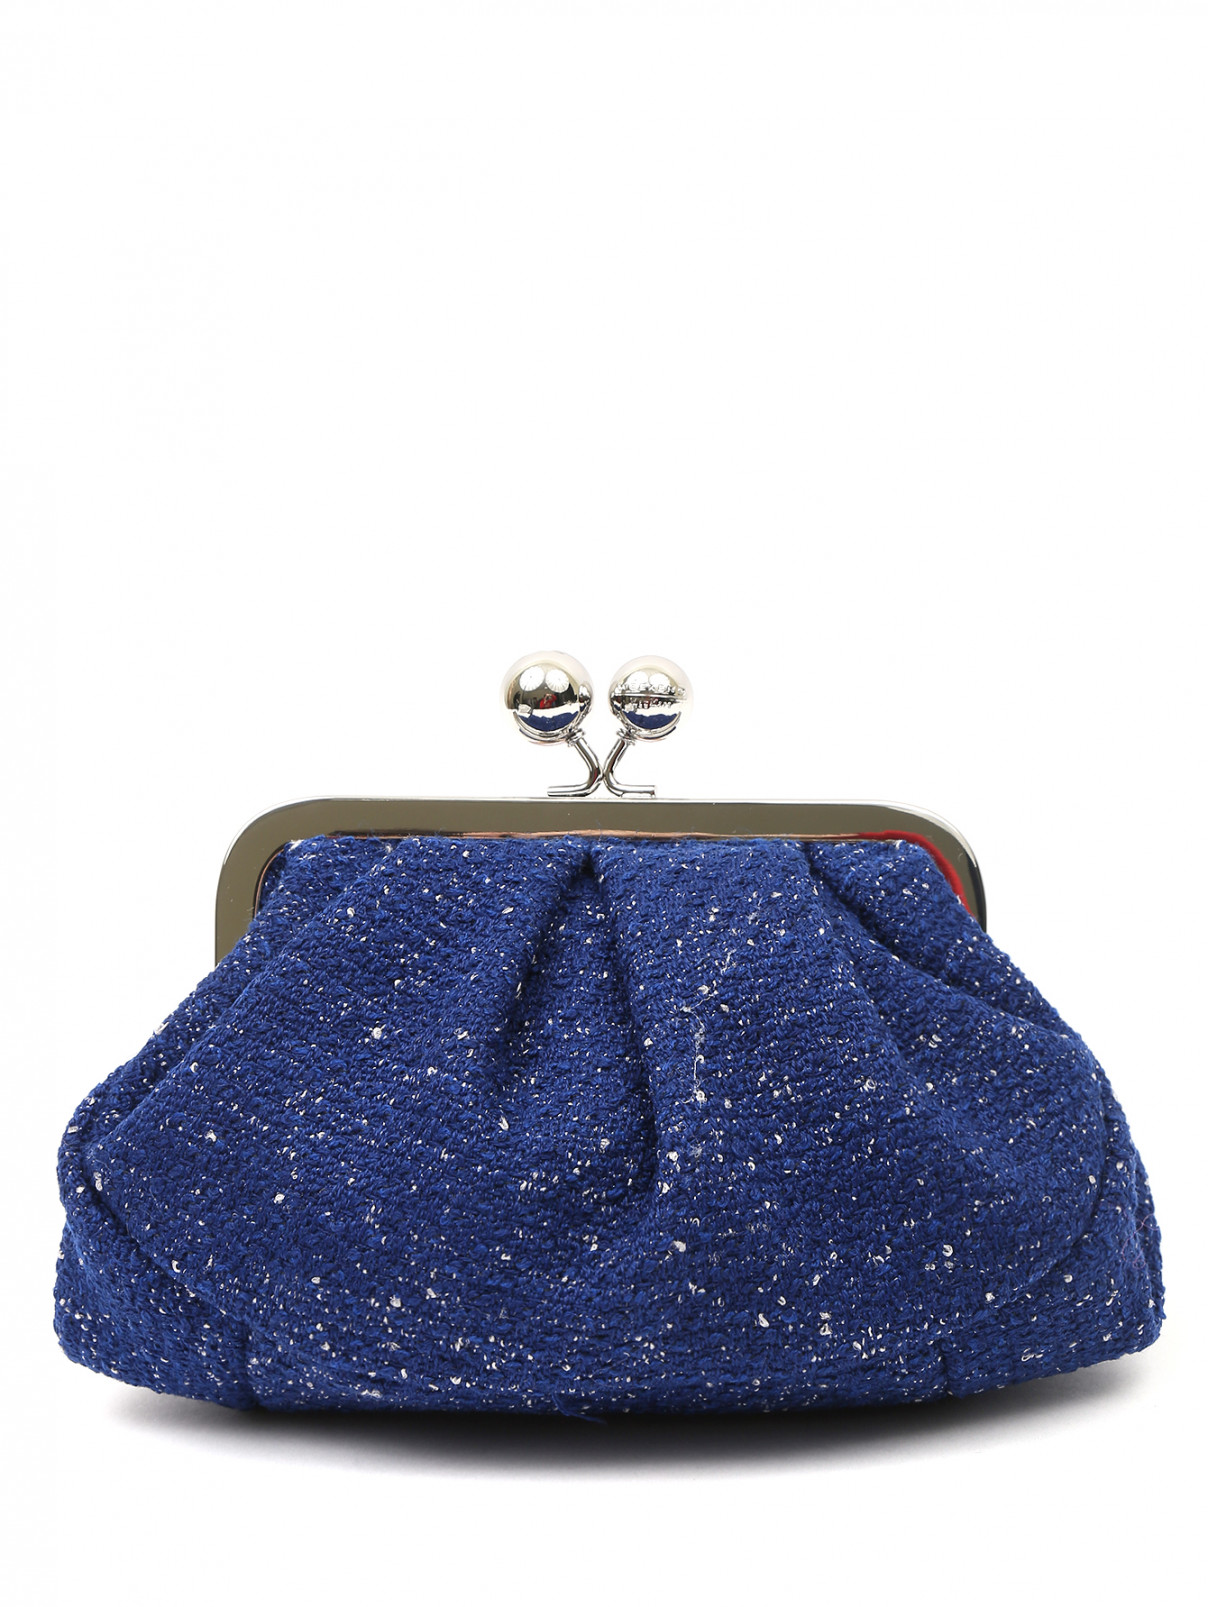 Сумка из текстиля на ремне-цепочке Weekend Max Mara  –  Общий вид  – Цвет:  Синий